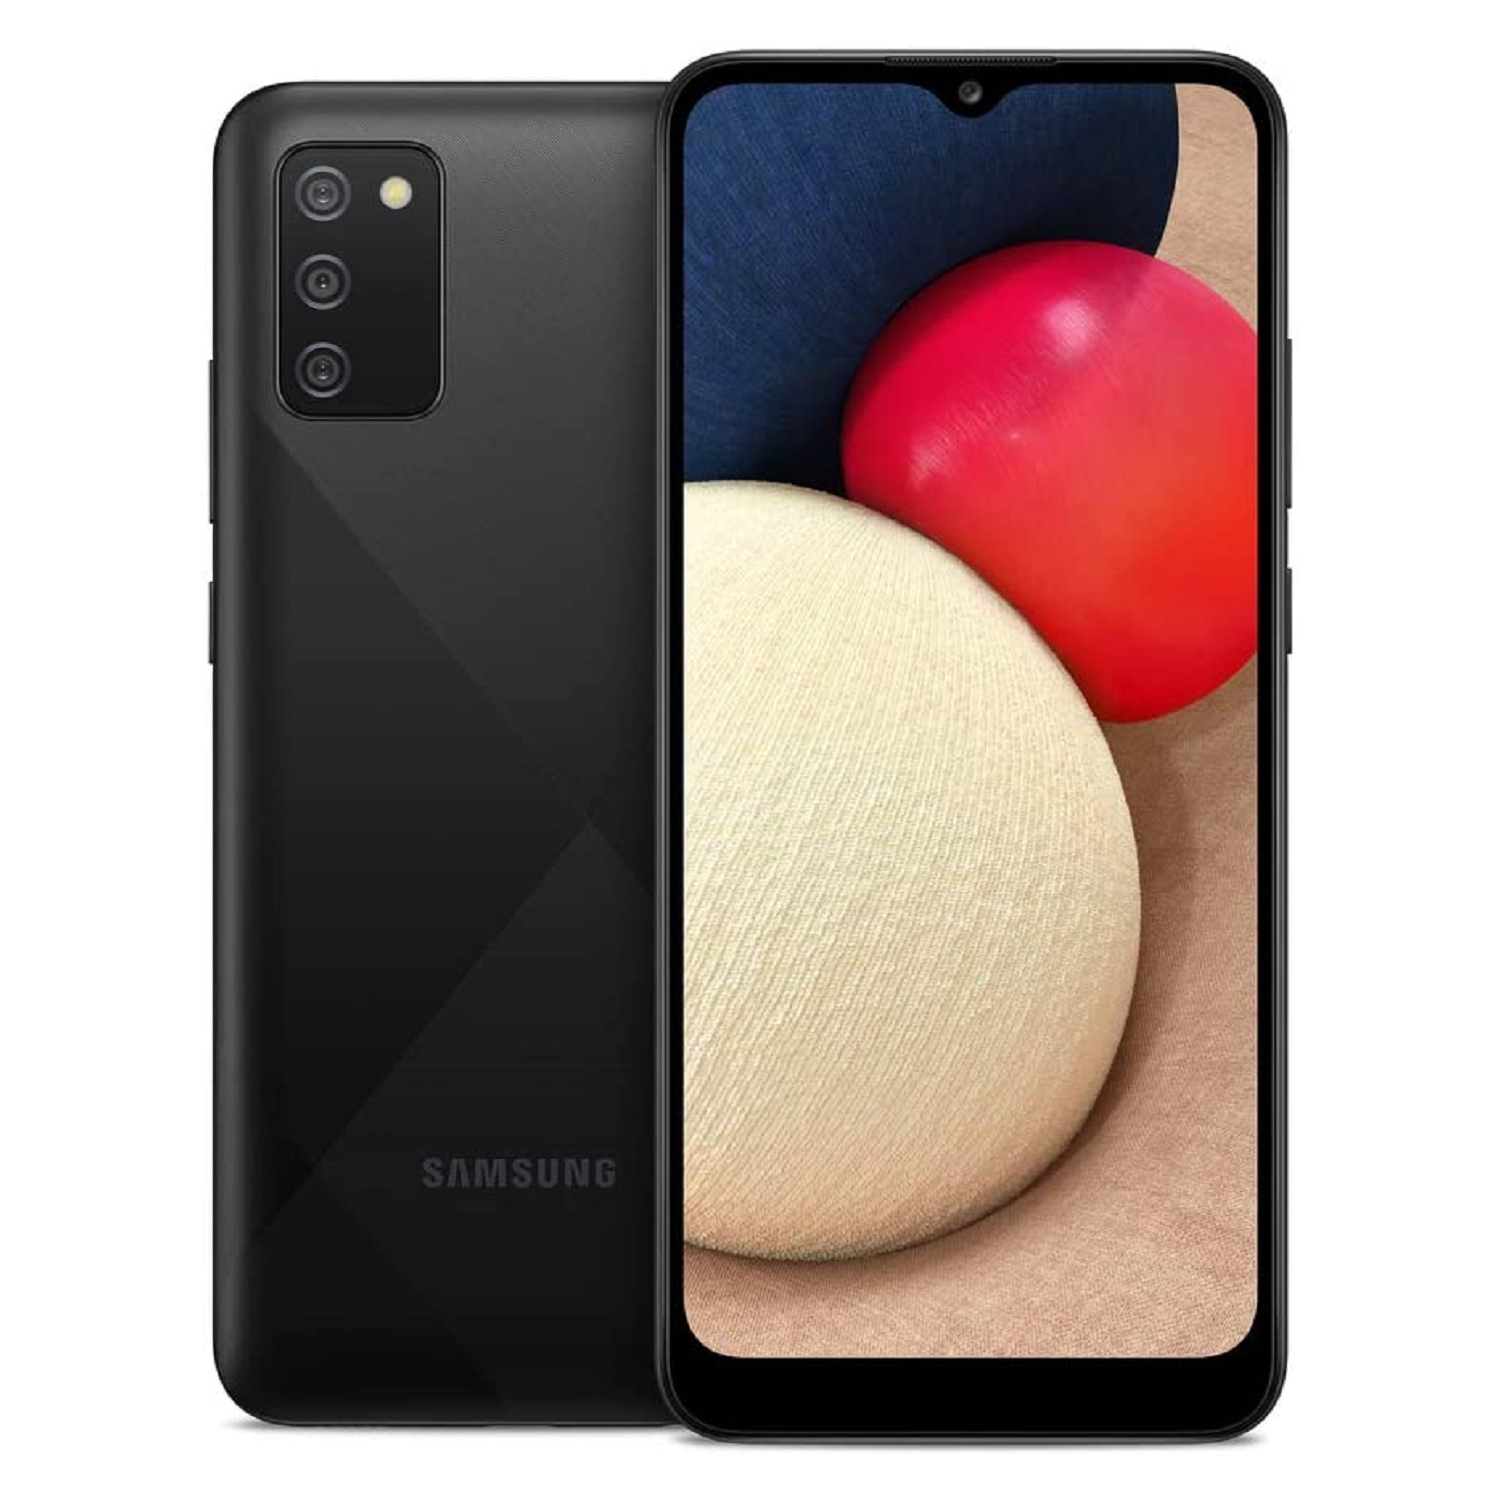 Refurbished (Excellent) - Samsung Galaxy A02S 32GB (SM-A025U1) - GSM Unlocked Smartphone - International Model - Black - Certified Refurbished